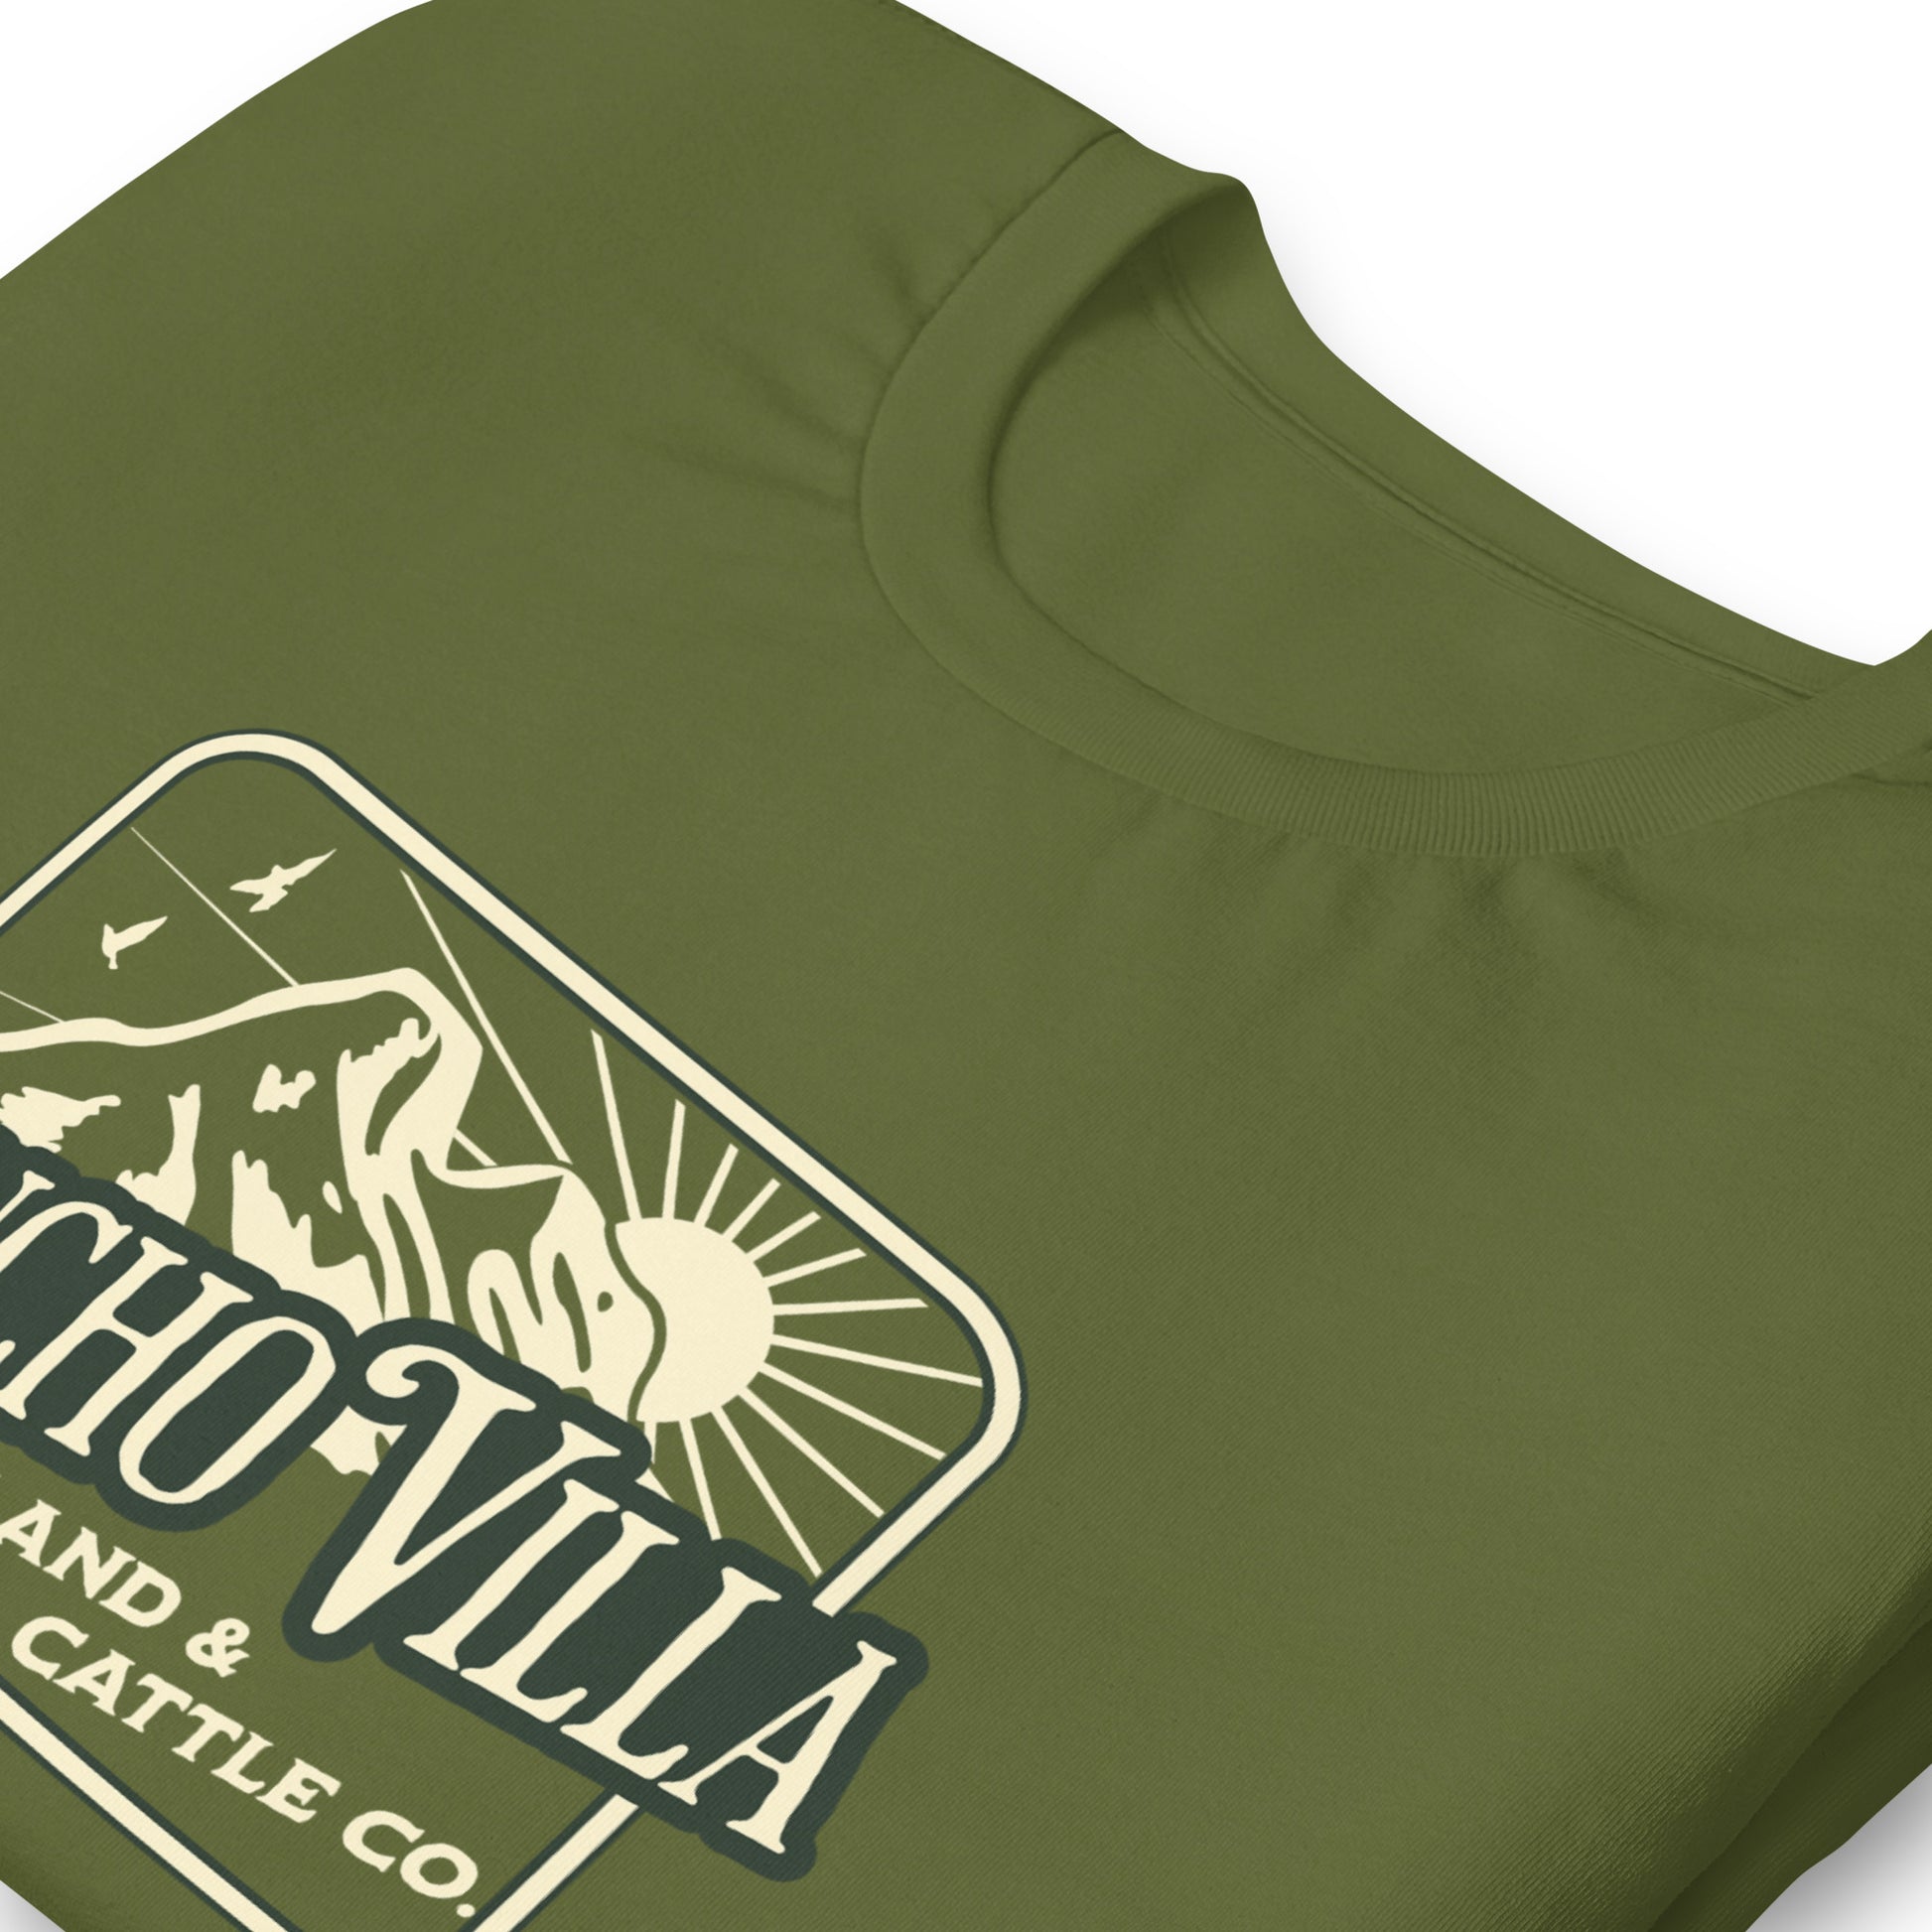 Falde tilbage Overskrift Skrive ud PANCHO VILLA LAND & CATTLE CO. t-shirt – The Pancho Villa Company